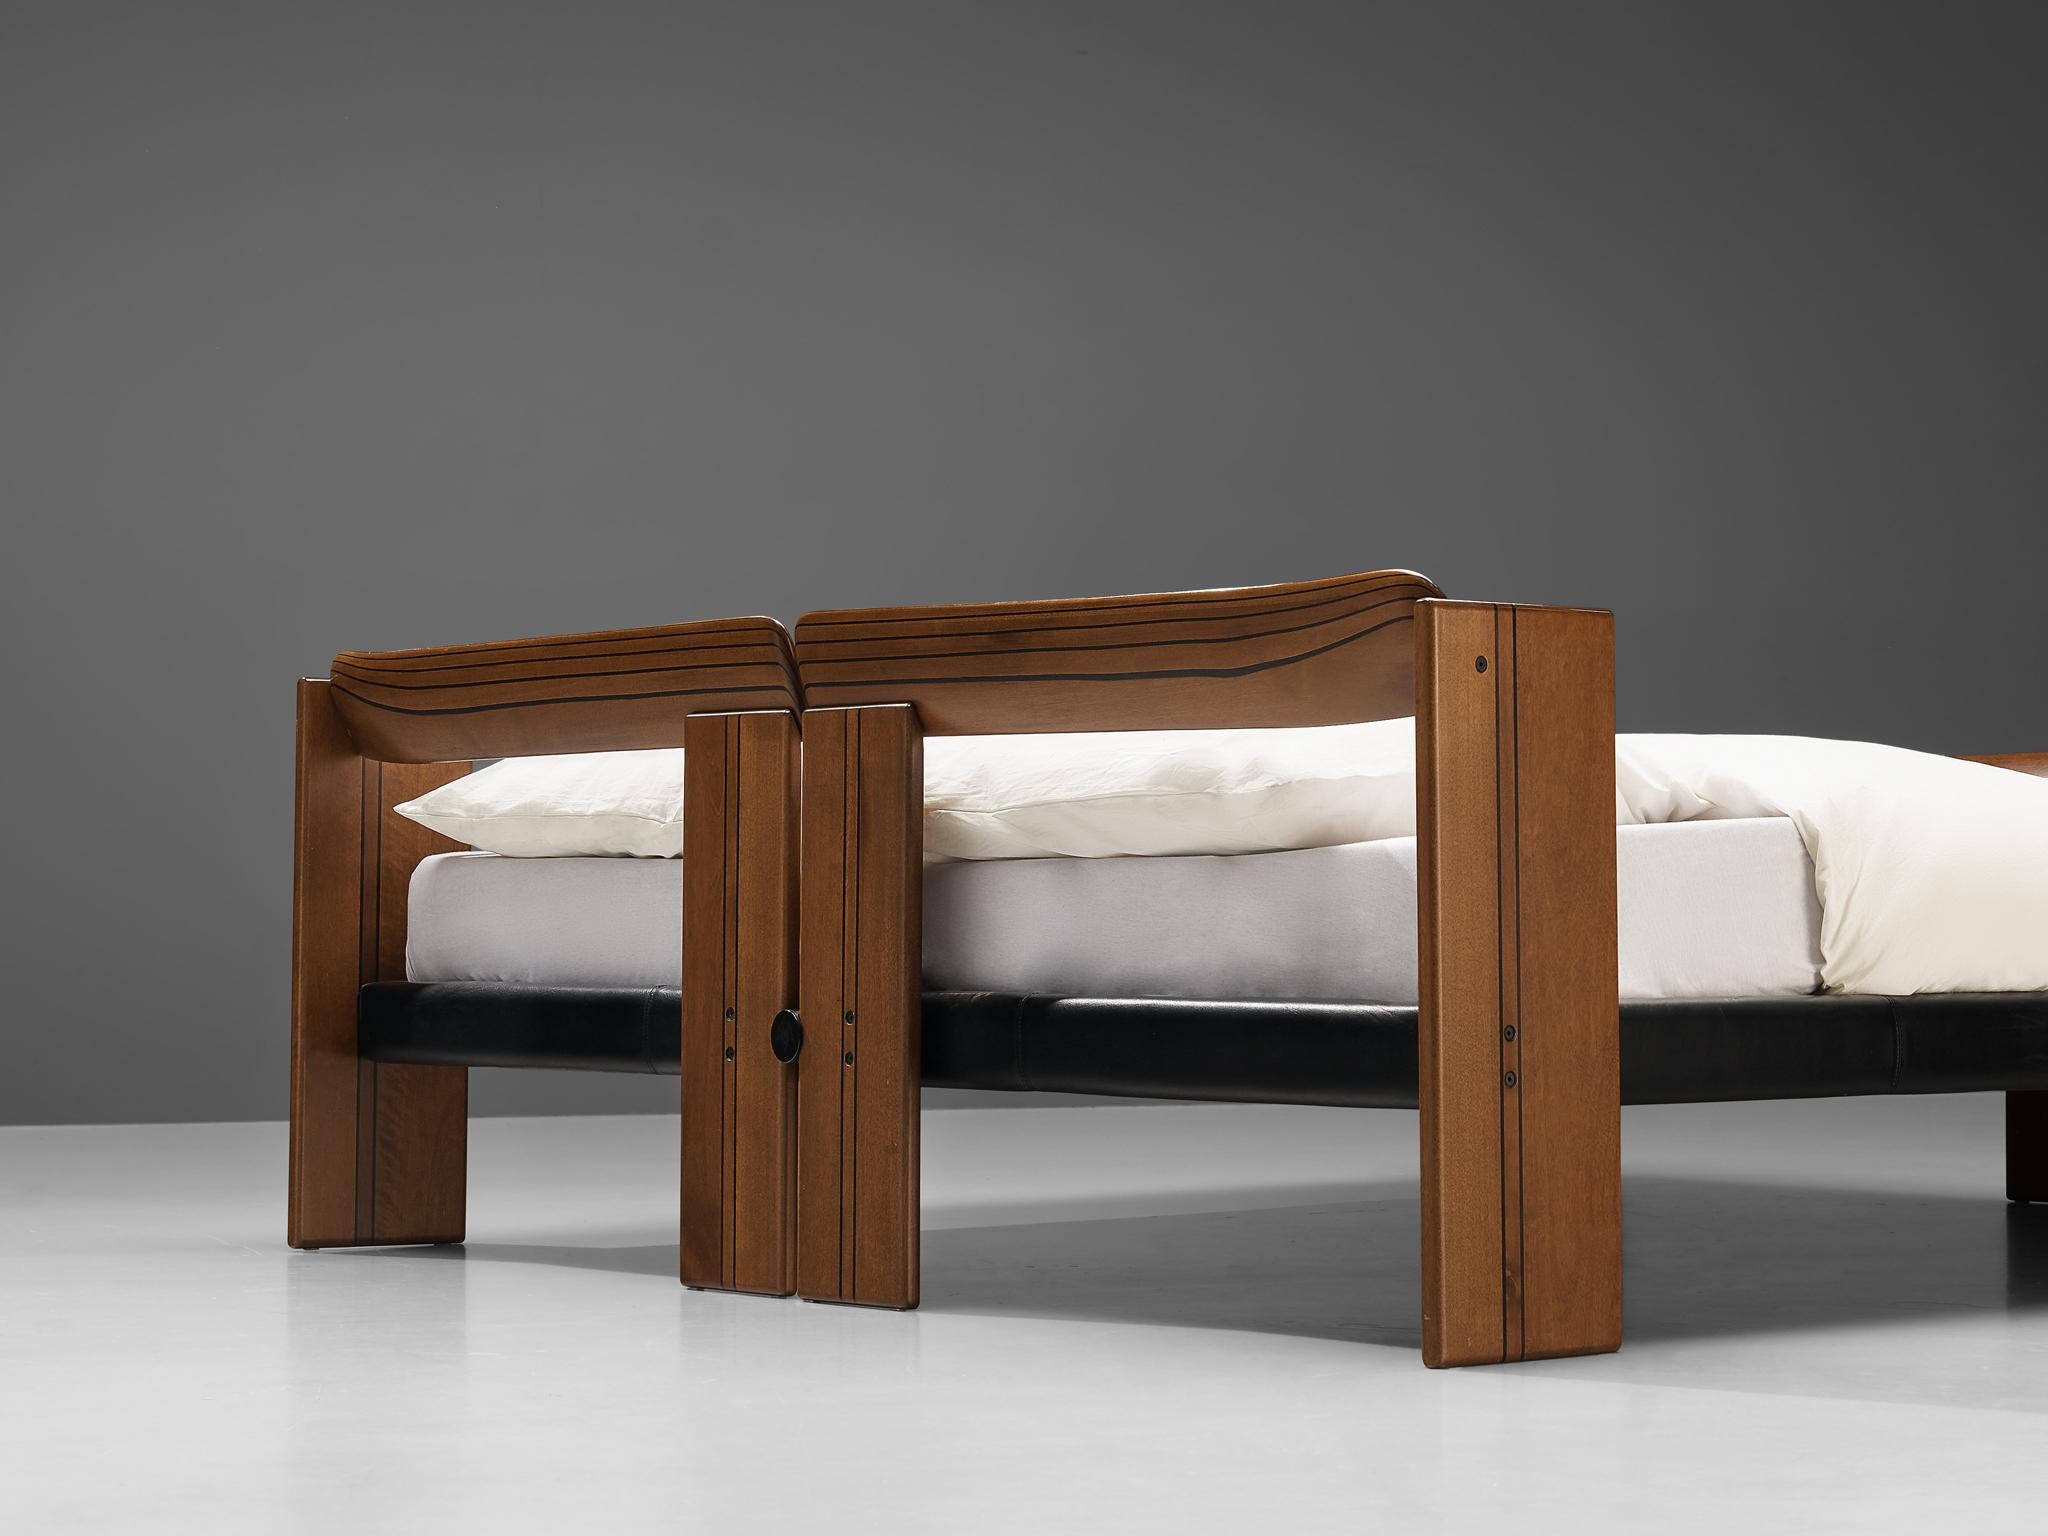 Afra & Tobia Scarpa 'Artona' Double Bed with Nightstands 2